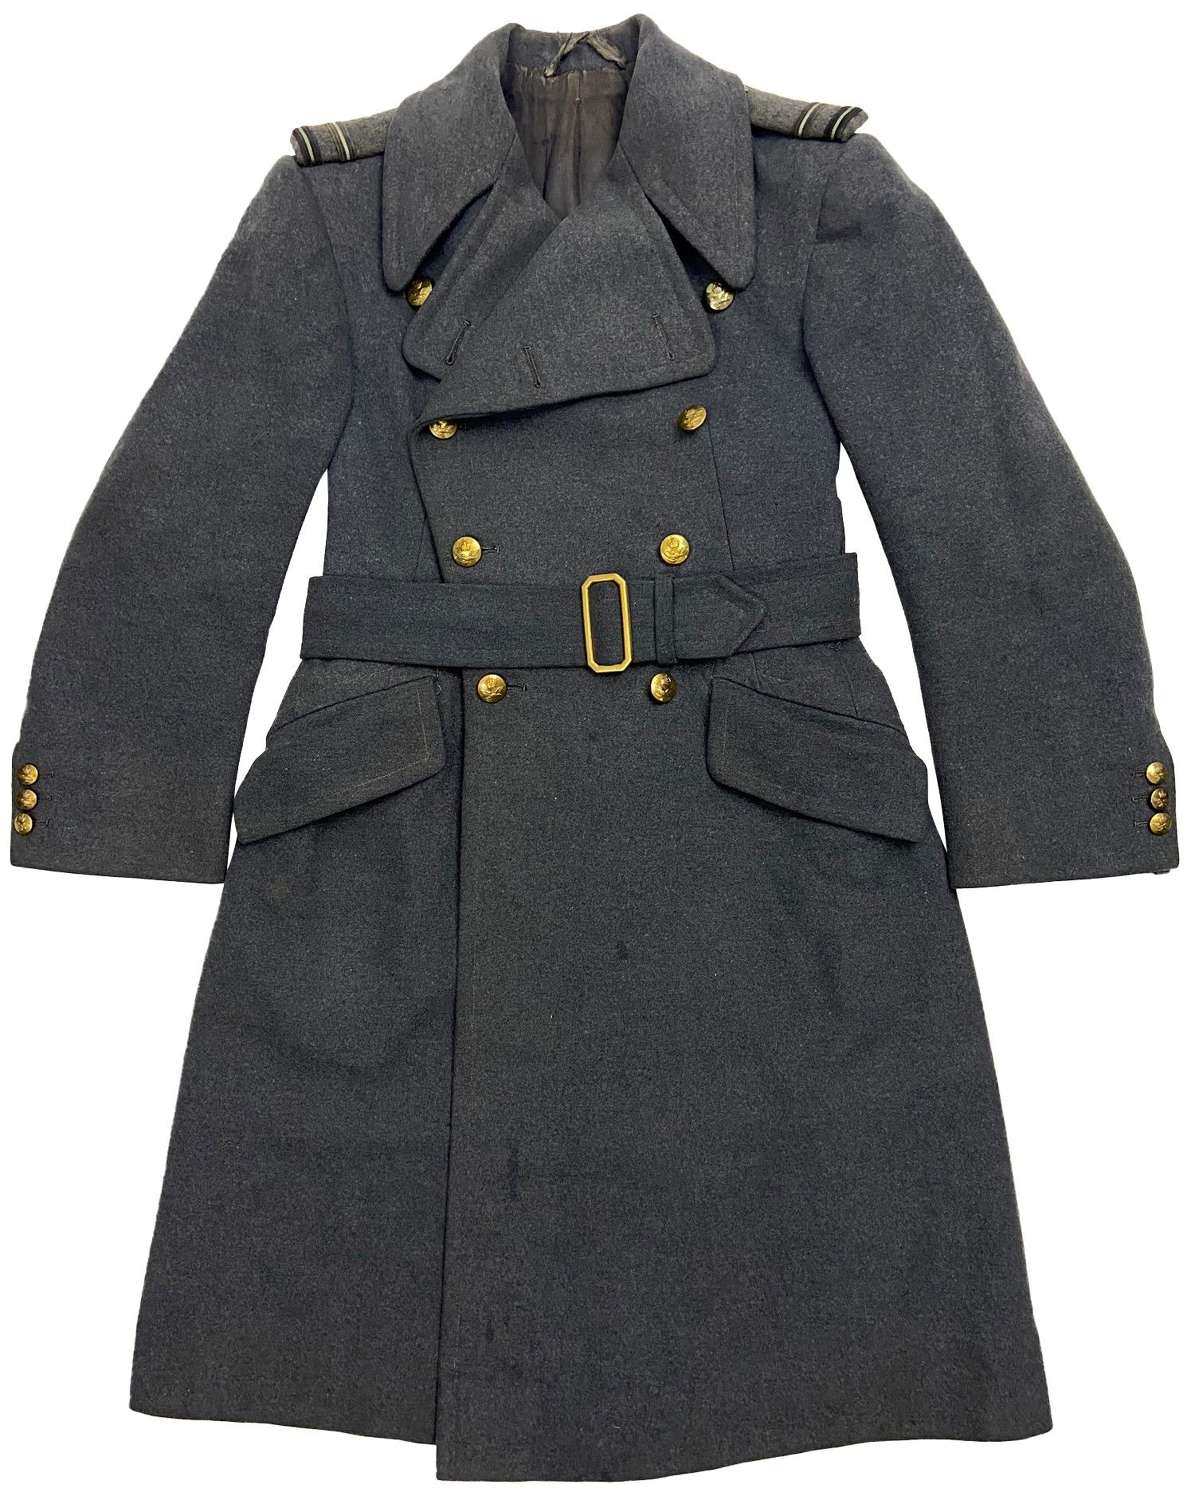 Original WW2 RAF Officers Greatcoat